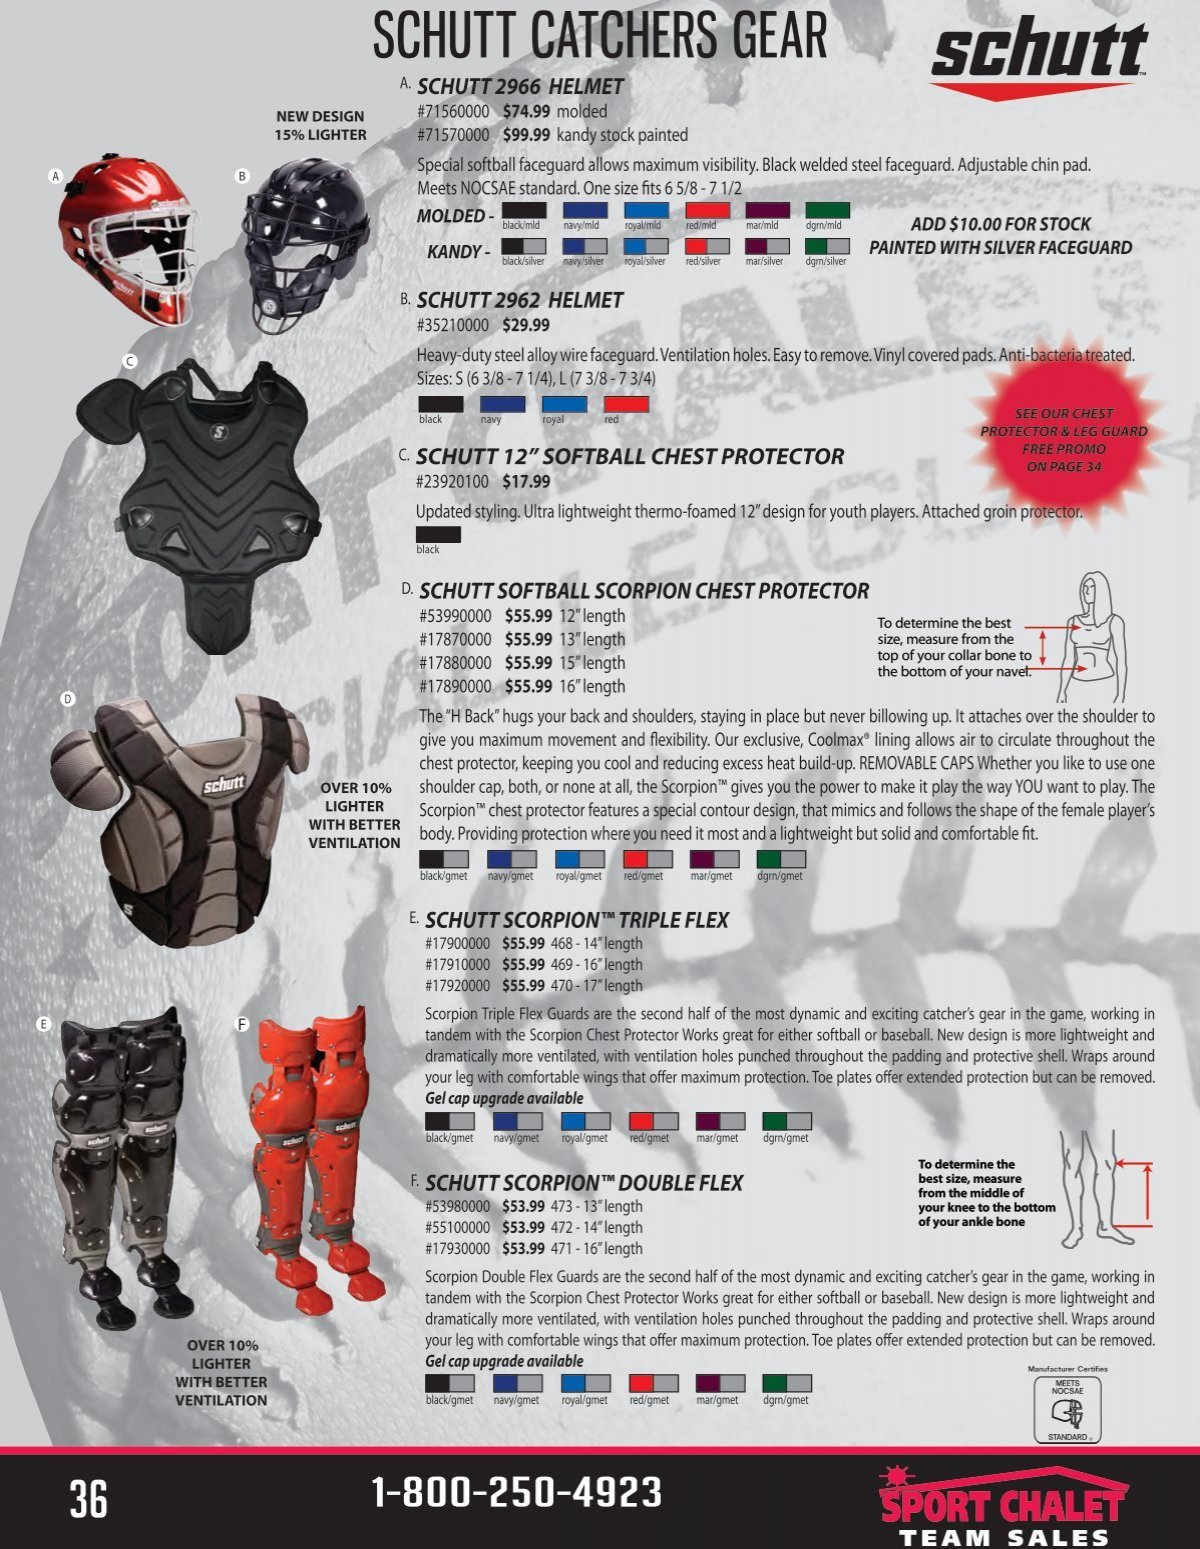 NIKE Men's Grip Strike Ltwt Crew Socks - Black/Anthracite/White, Size 13-15  : : Fashion